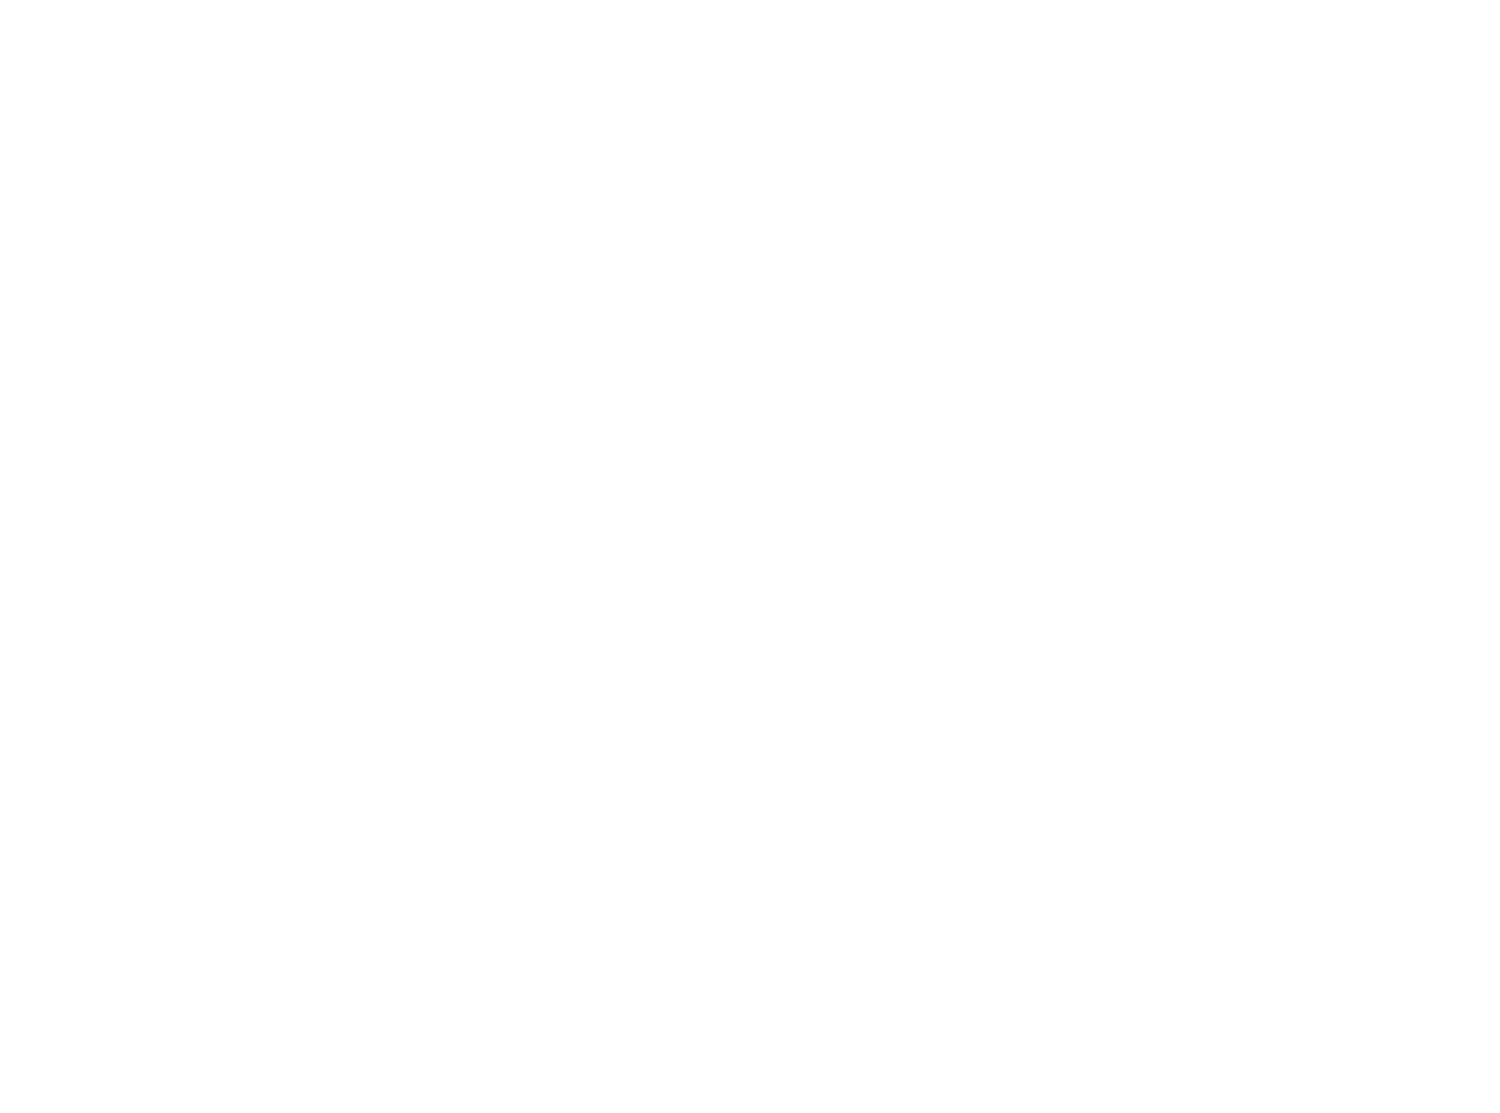 Kenneth MacLeod Design